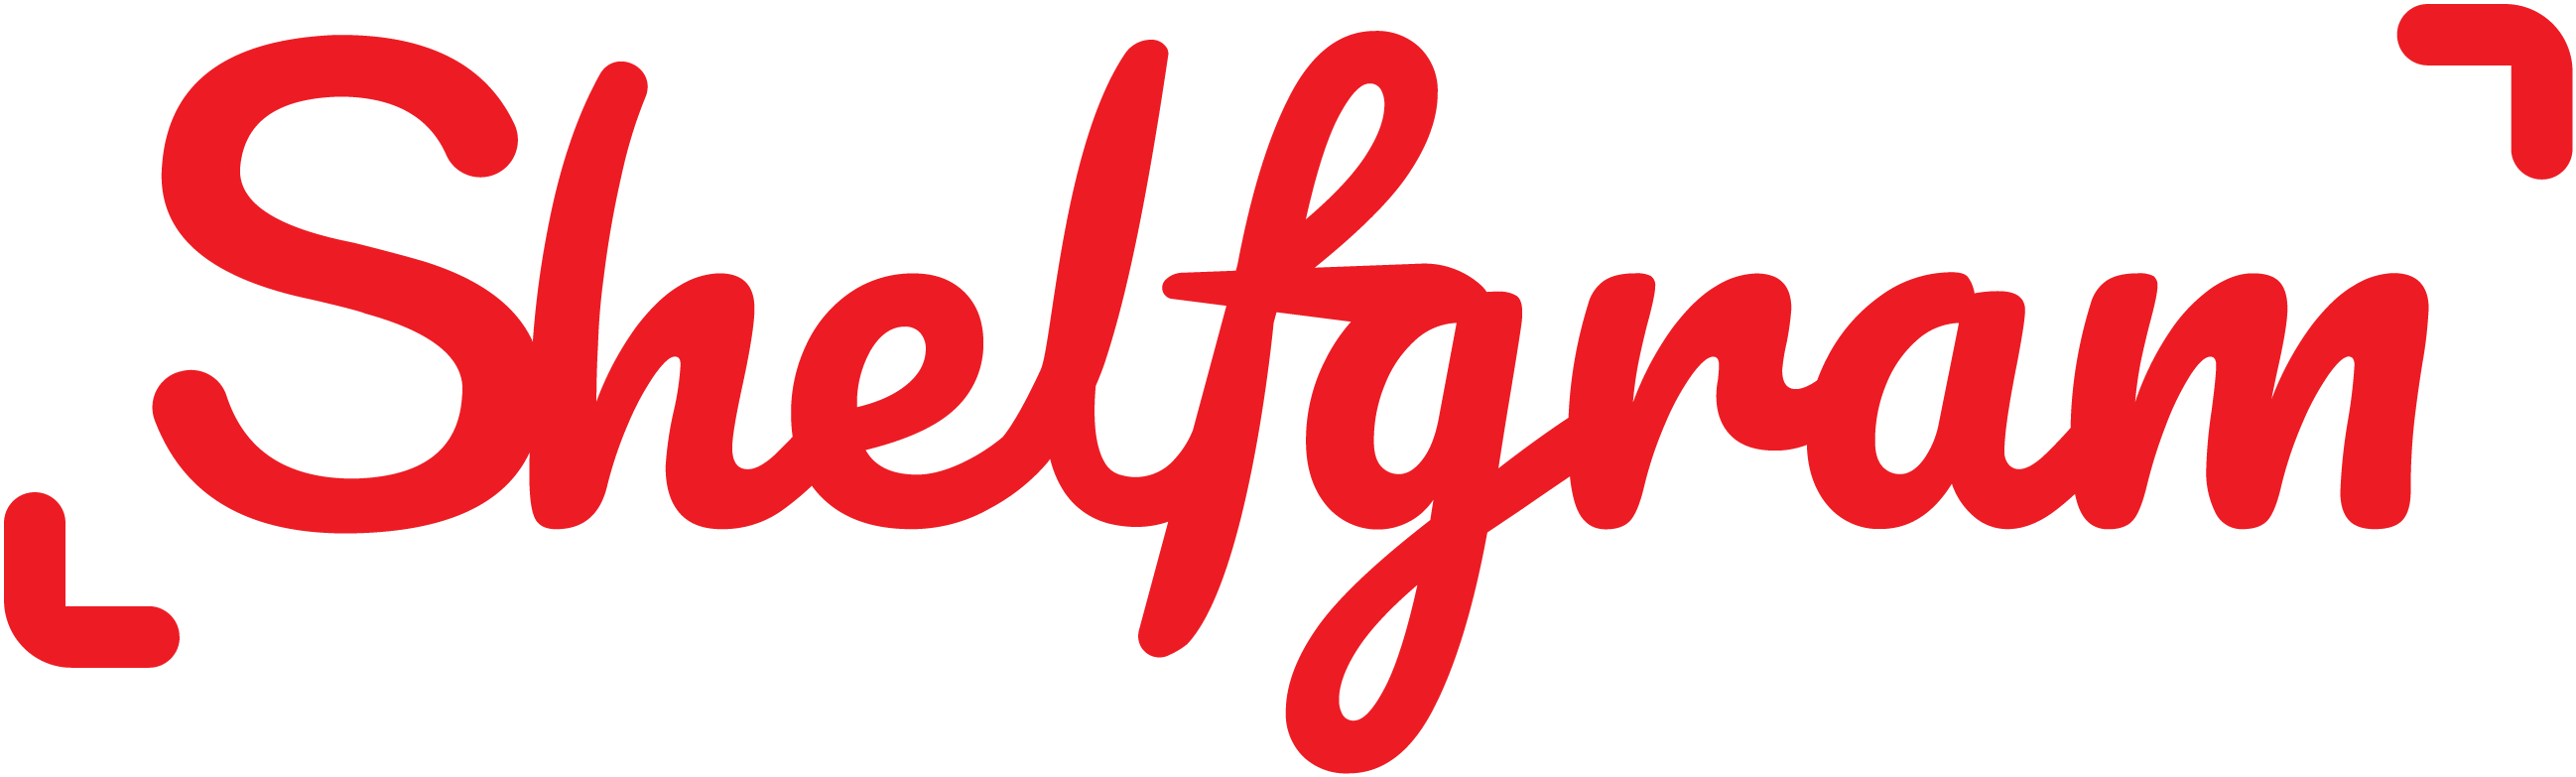 Logo in red